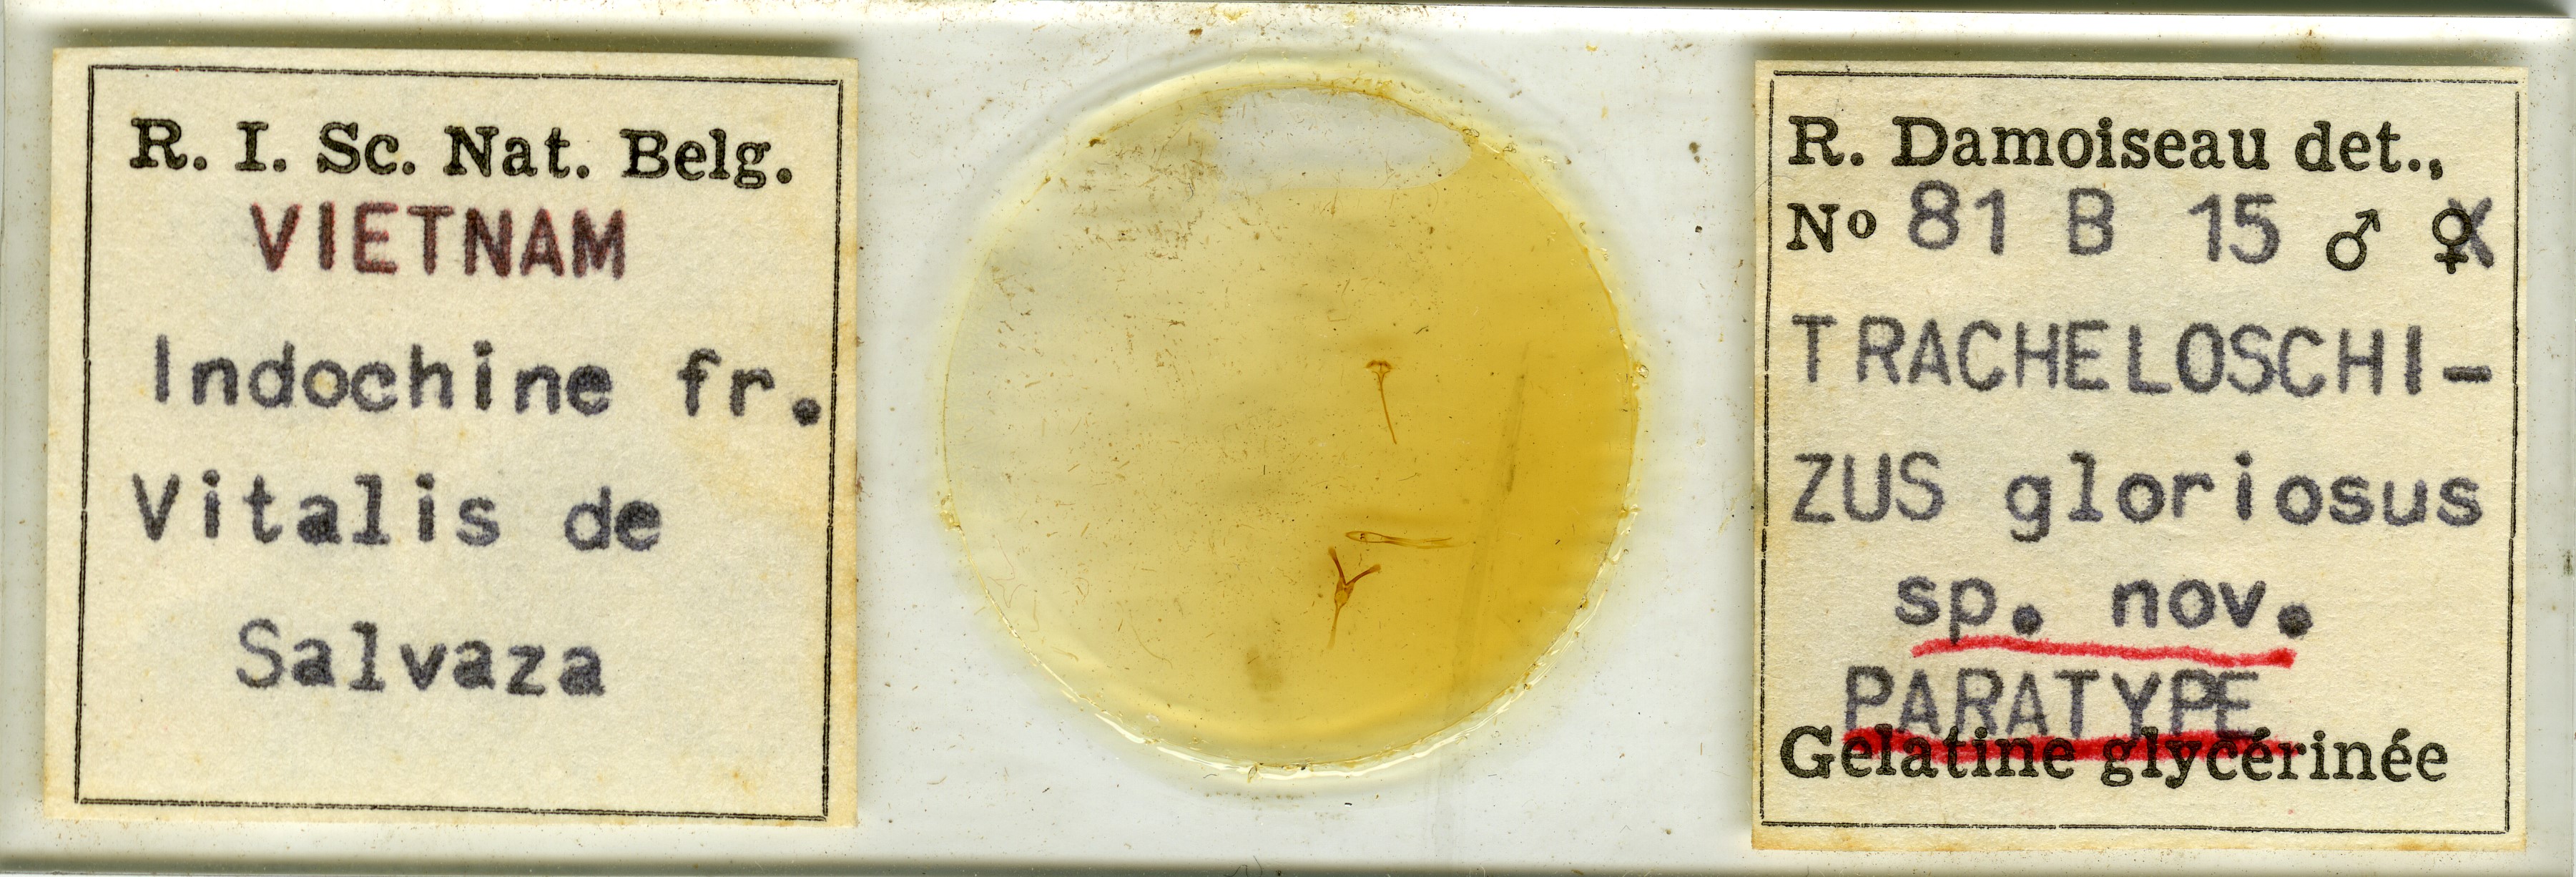 Tracheloschizus gloriosus pt Microscopic preparation.jpg